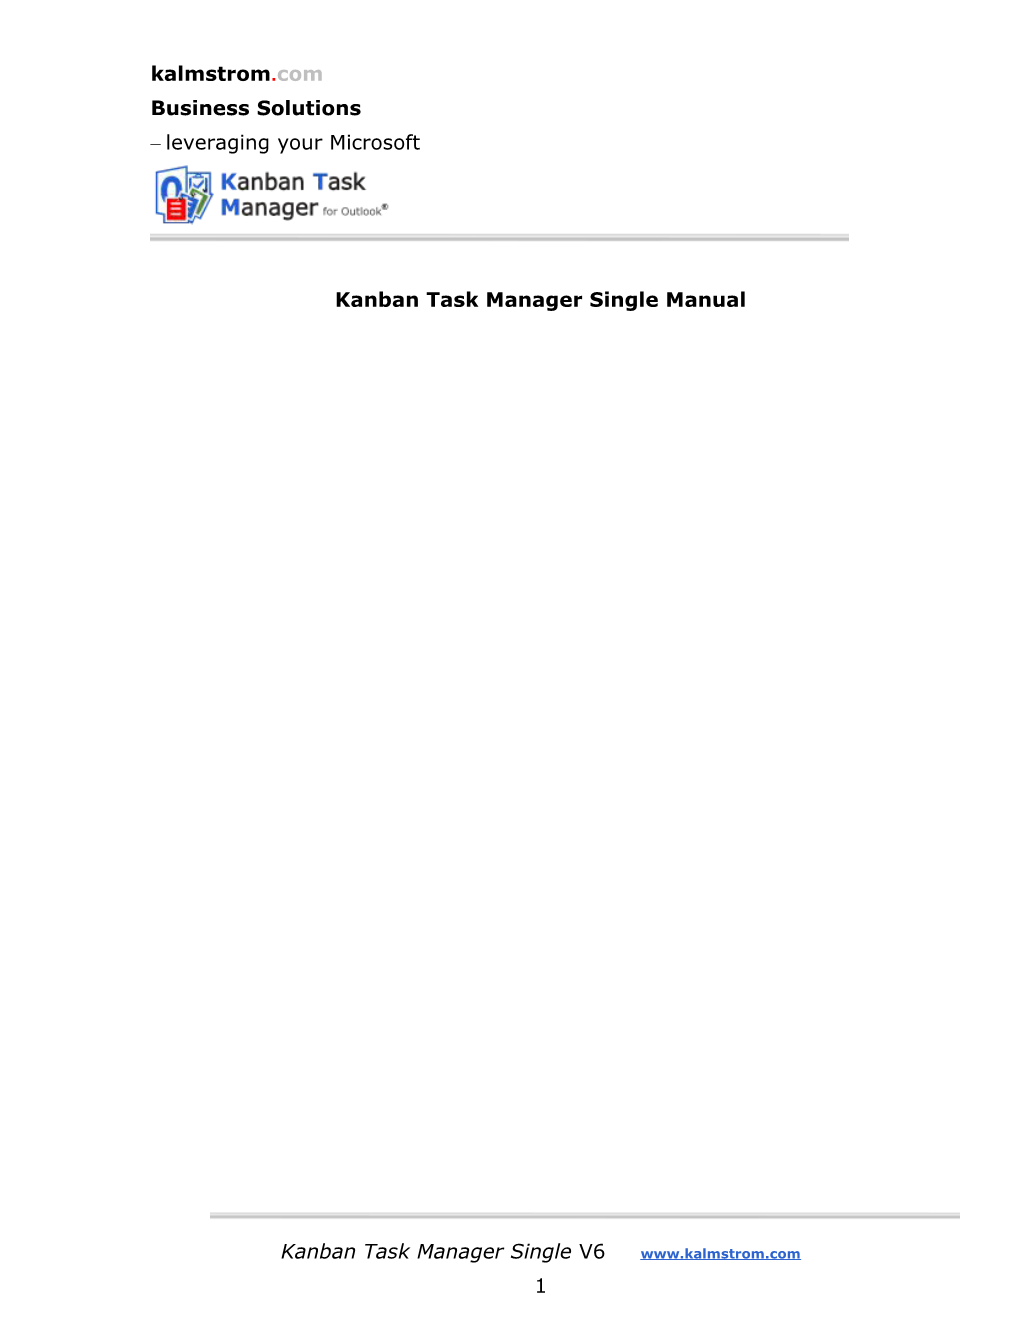 User Manual, Kanban Task Manager Single for Outlook